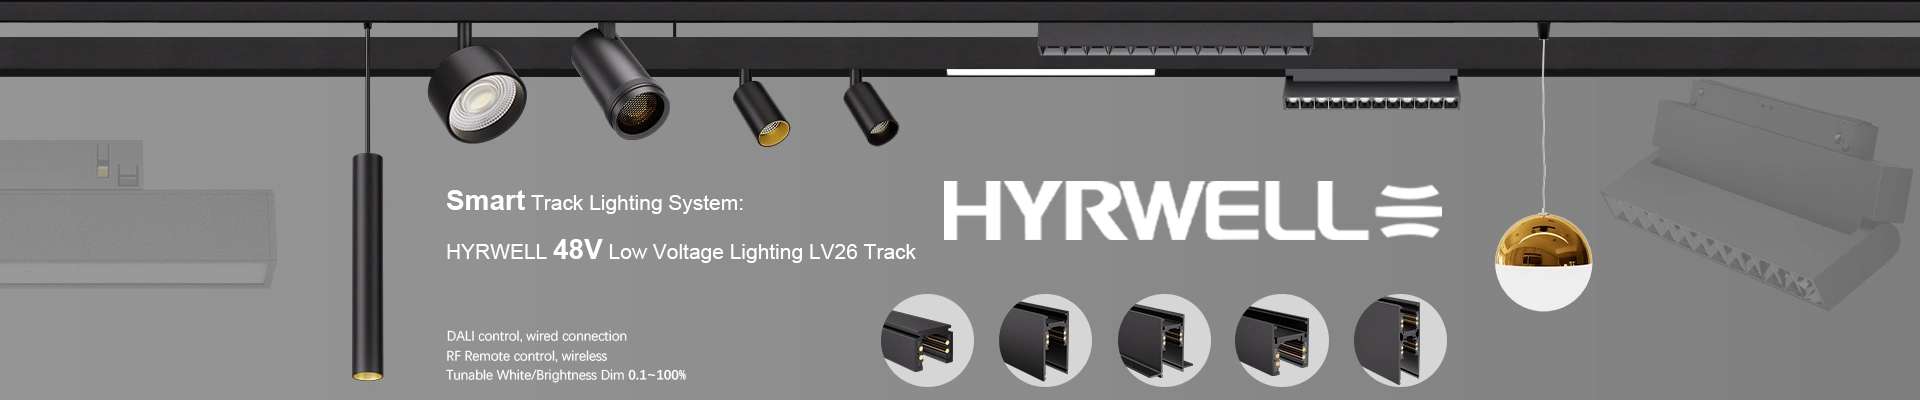 Hyrwell 48V Track Smart Lighting